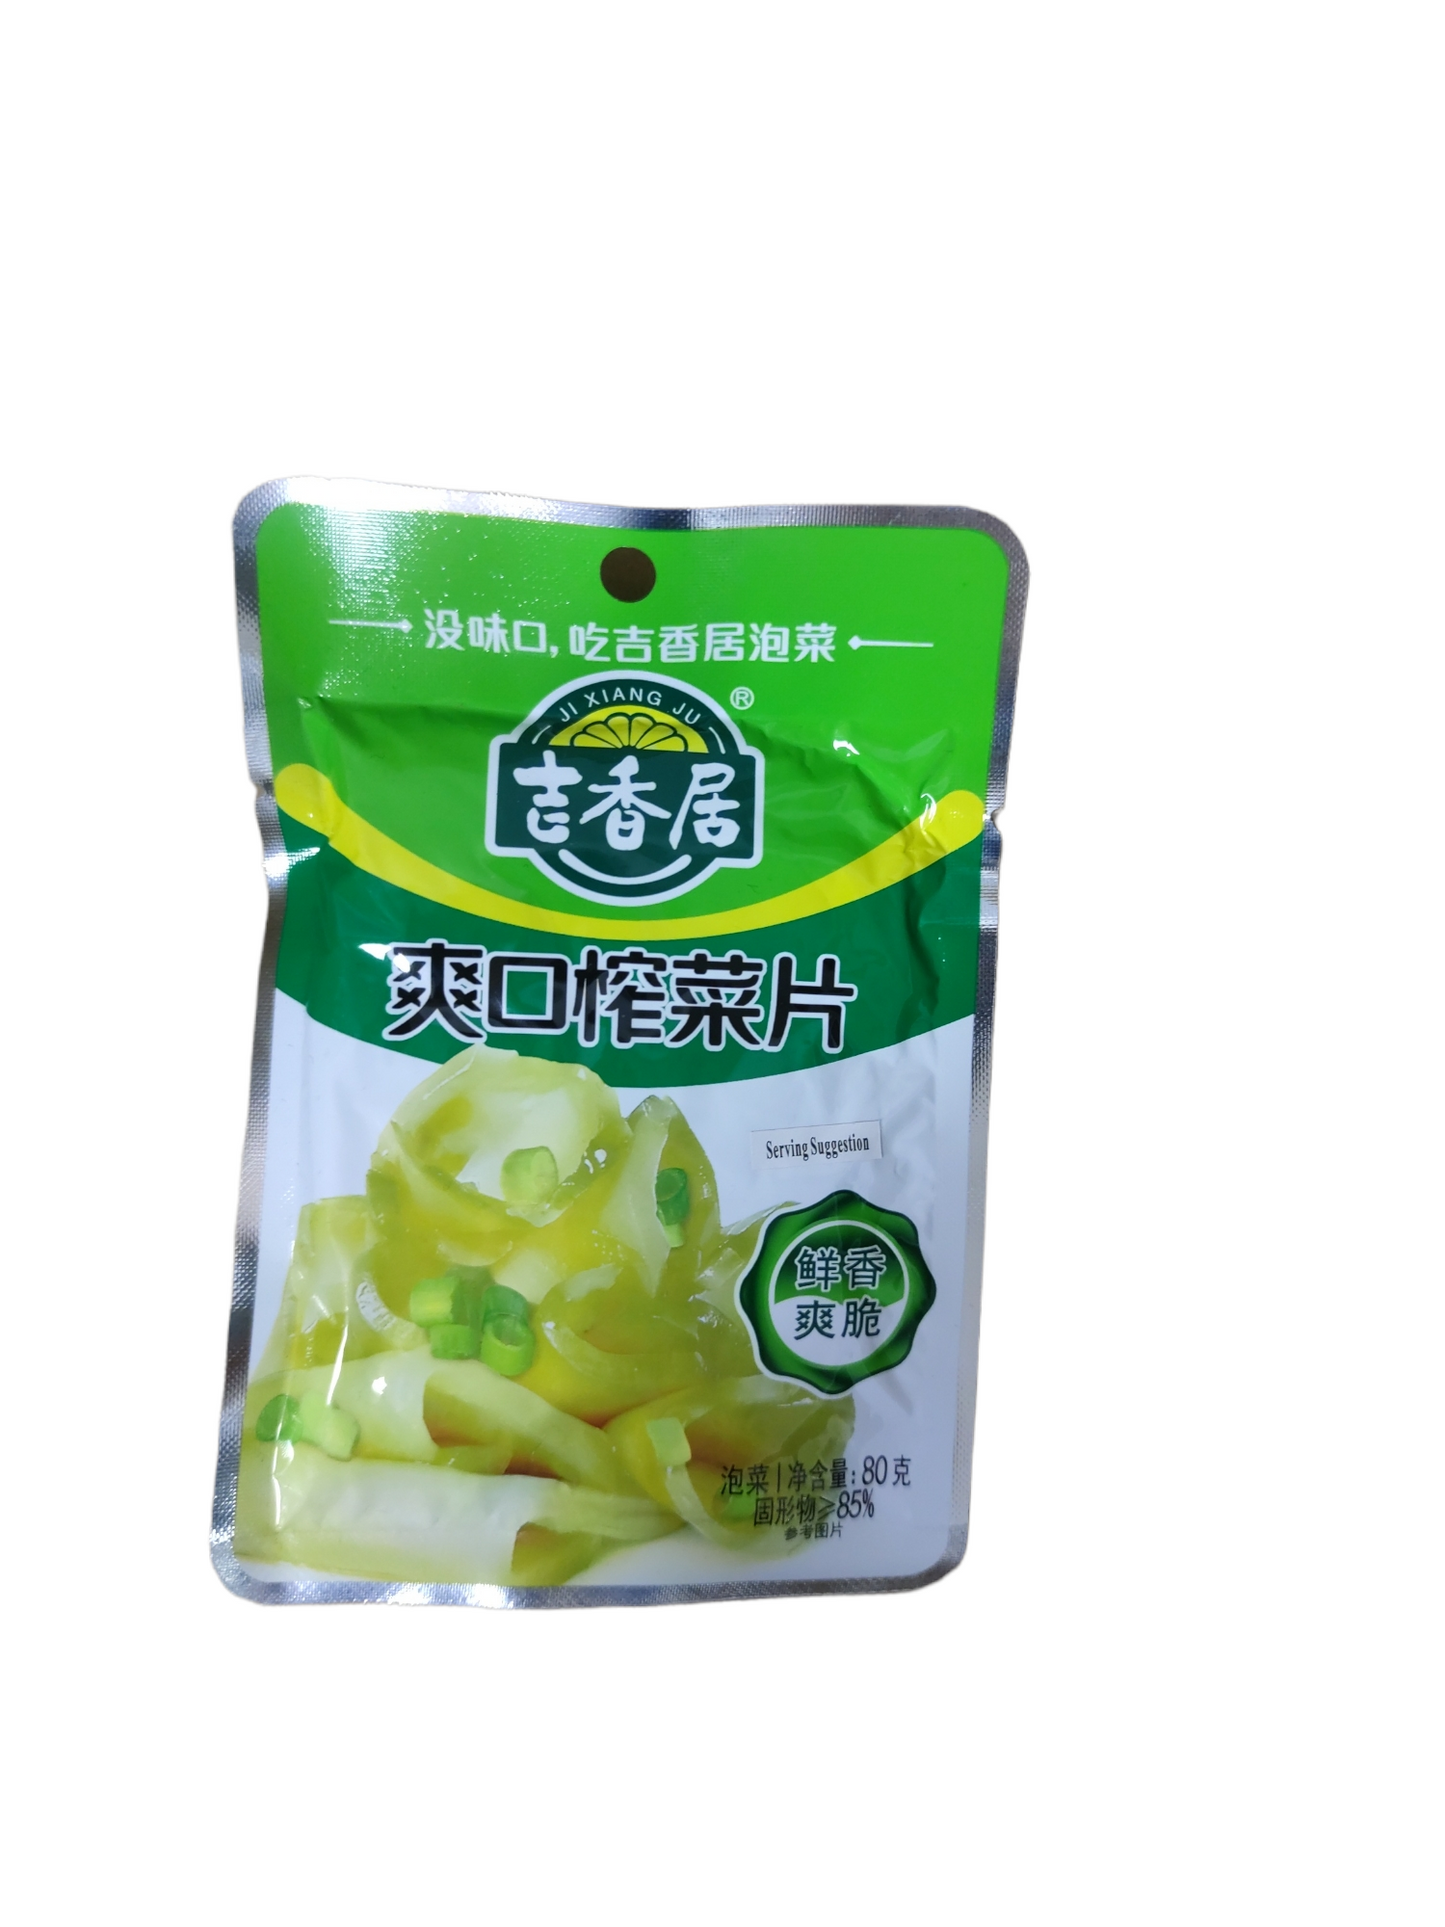 JXJ Sliced Preserved Vegetables 吉香居爽口榨菜片 80g